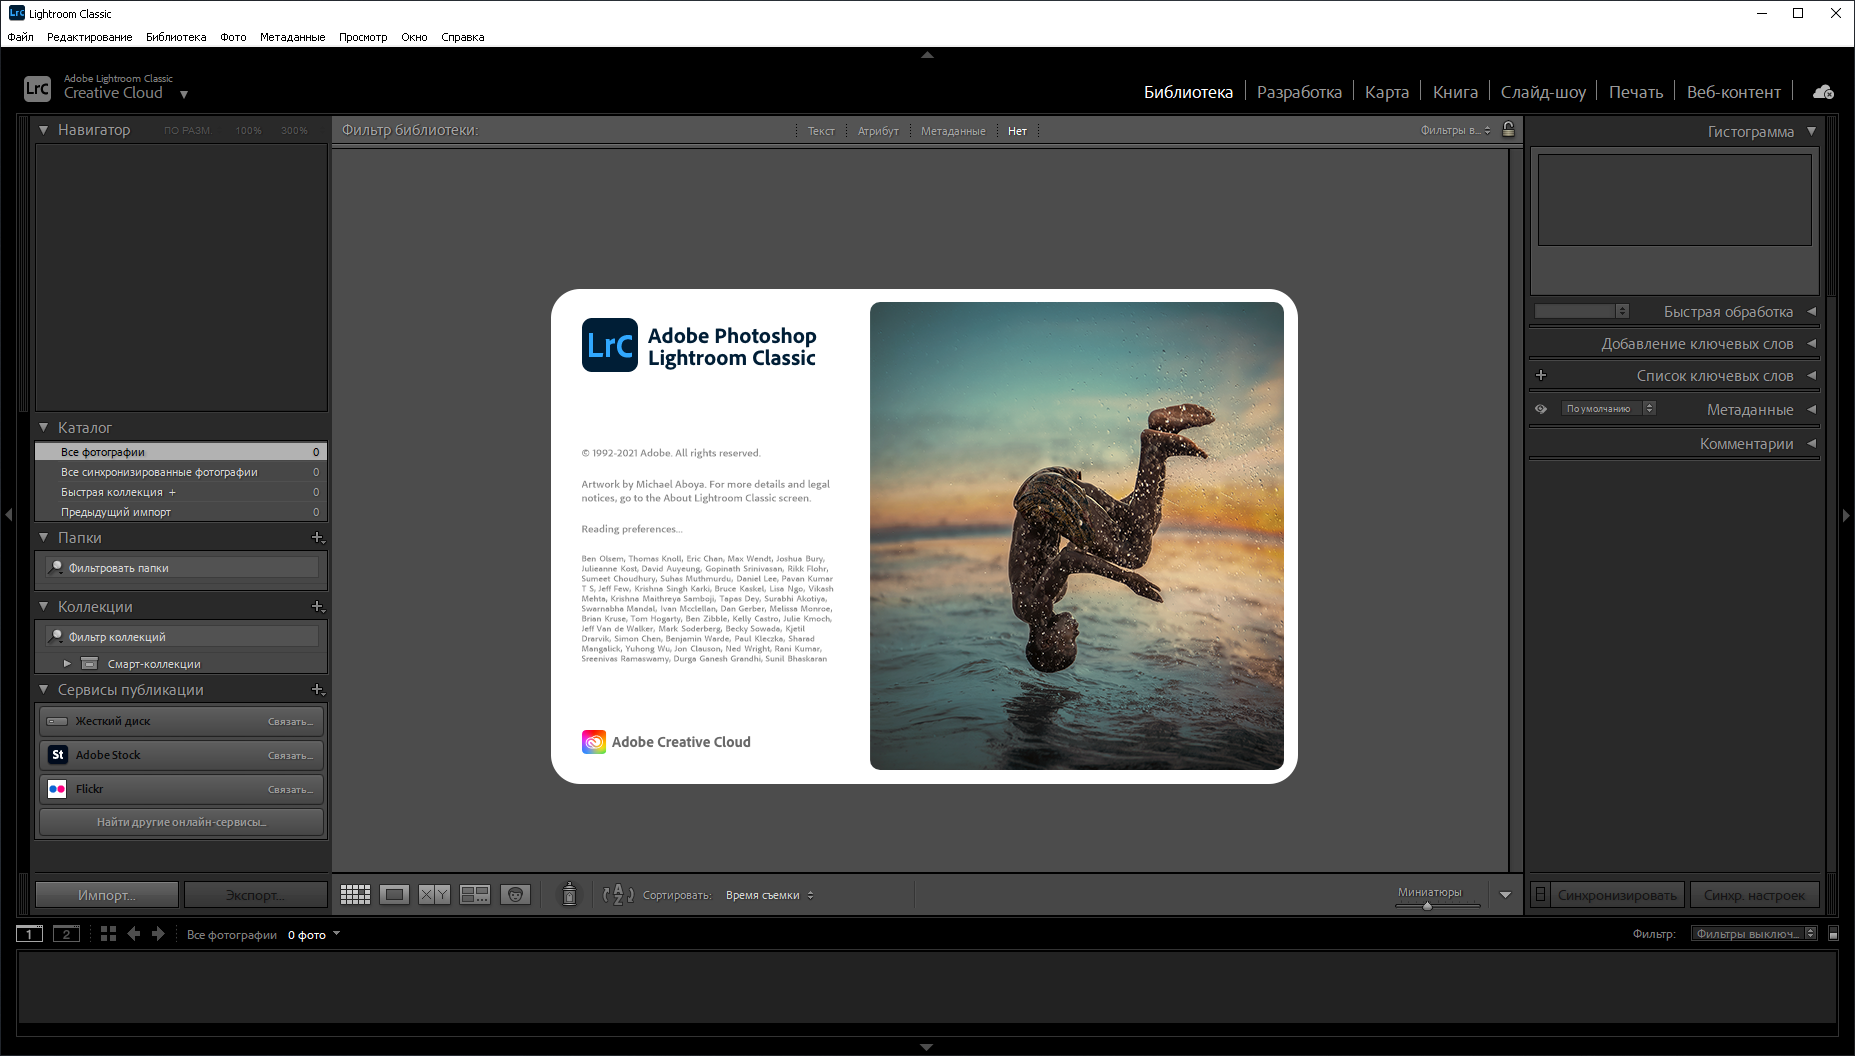 Adobe Photoshop Lightroom Classic 11.0.1.10 (2021) РС | Portable by XpucT